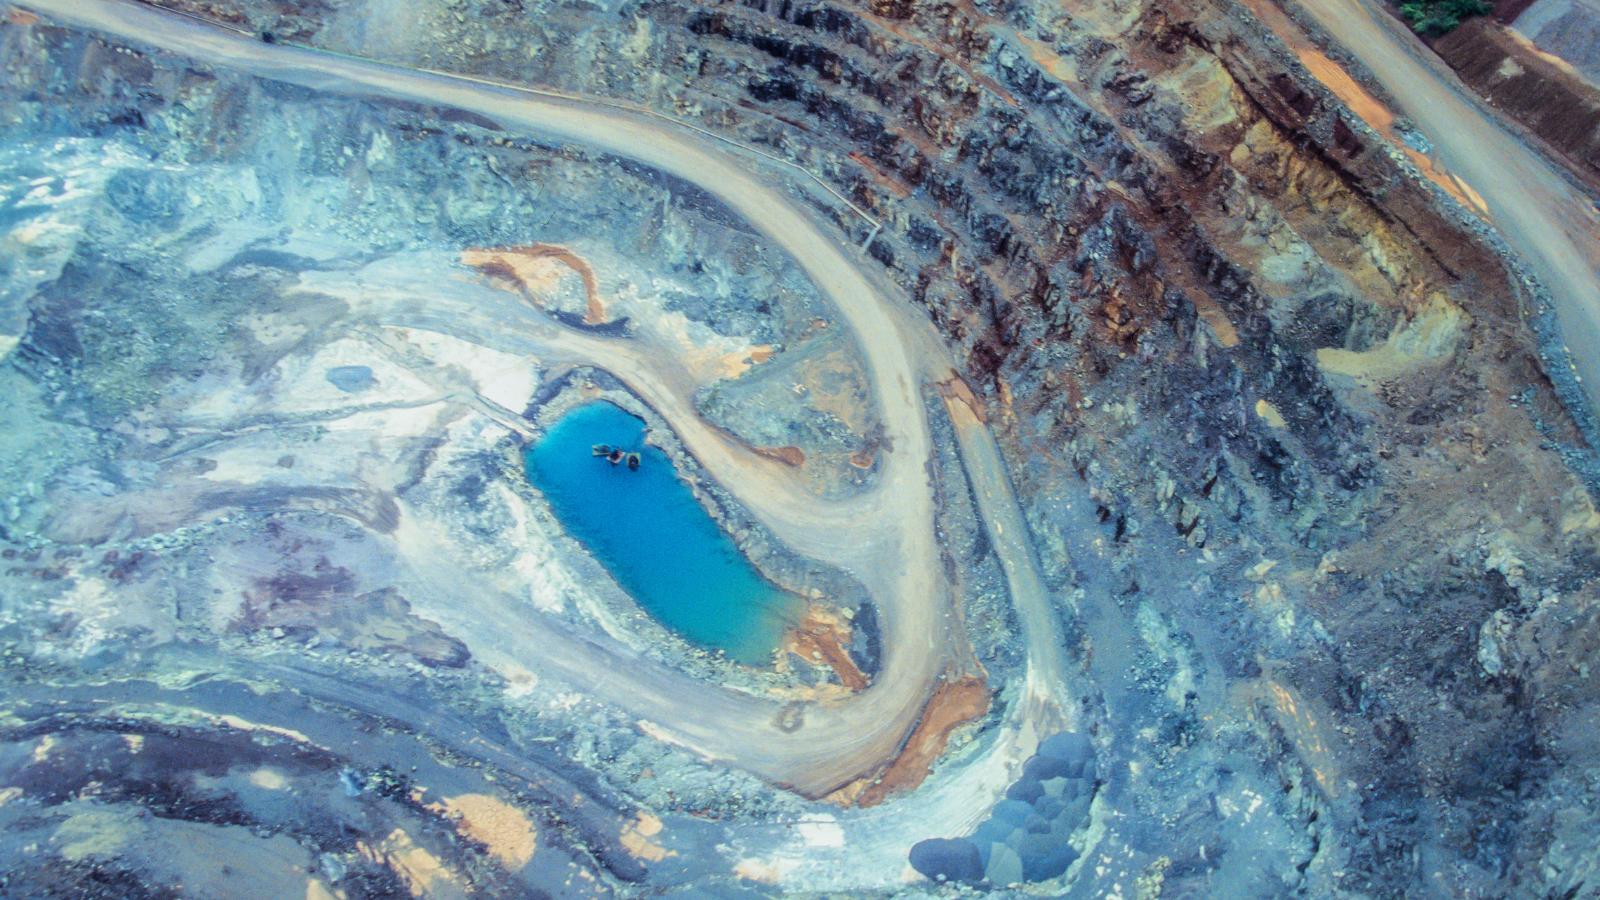 Ariel view of asbestos chrysotile mine